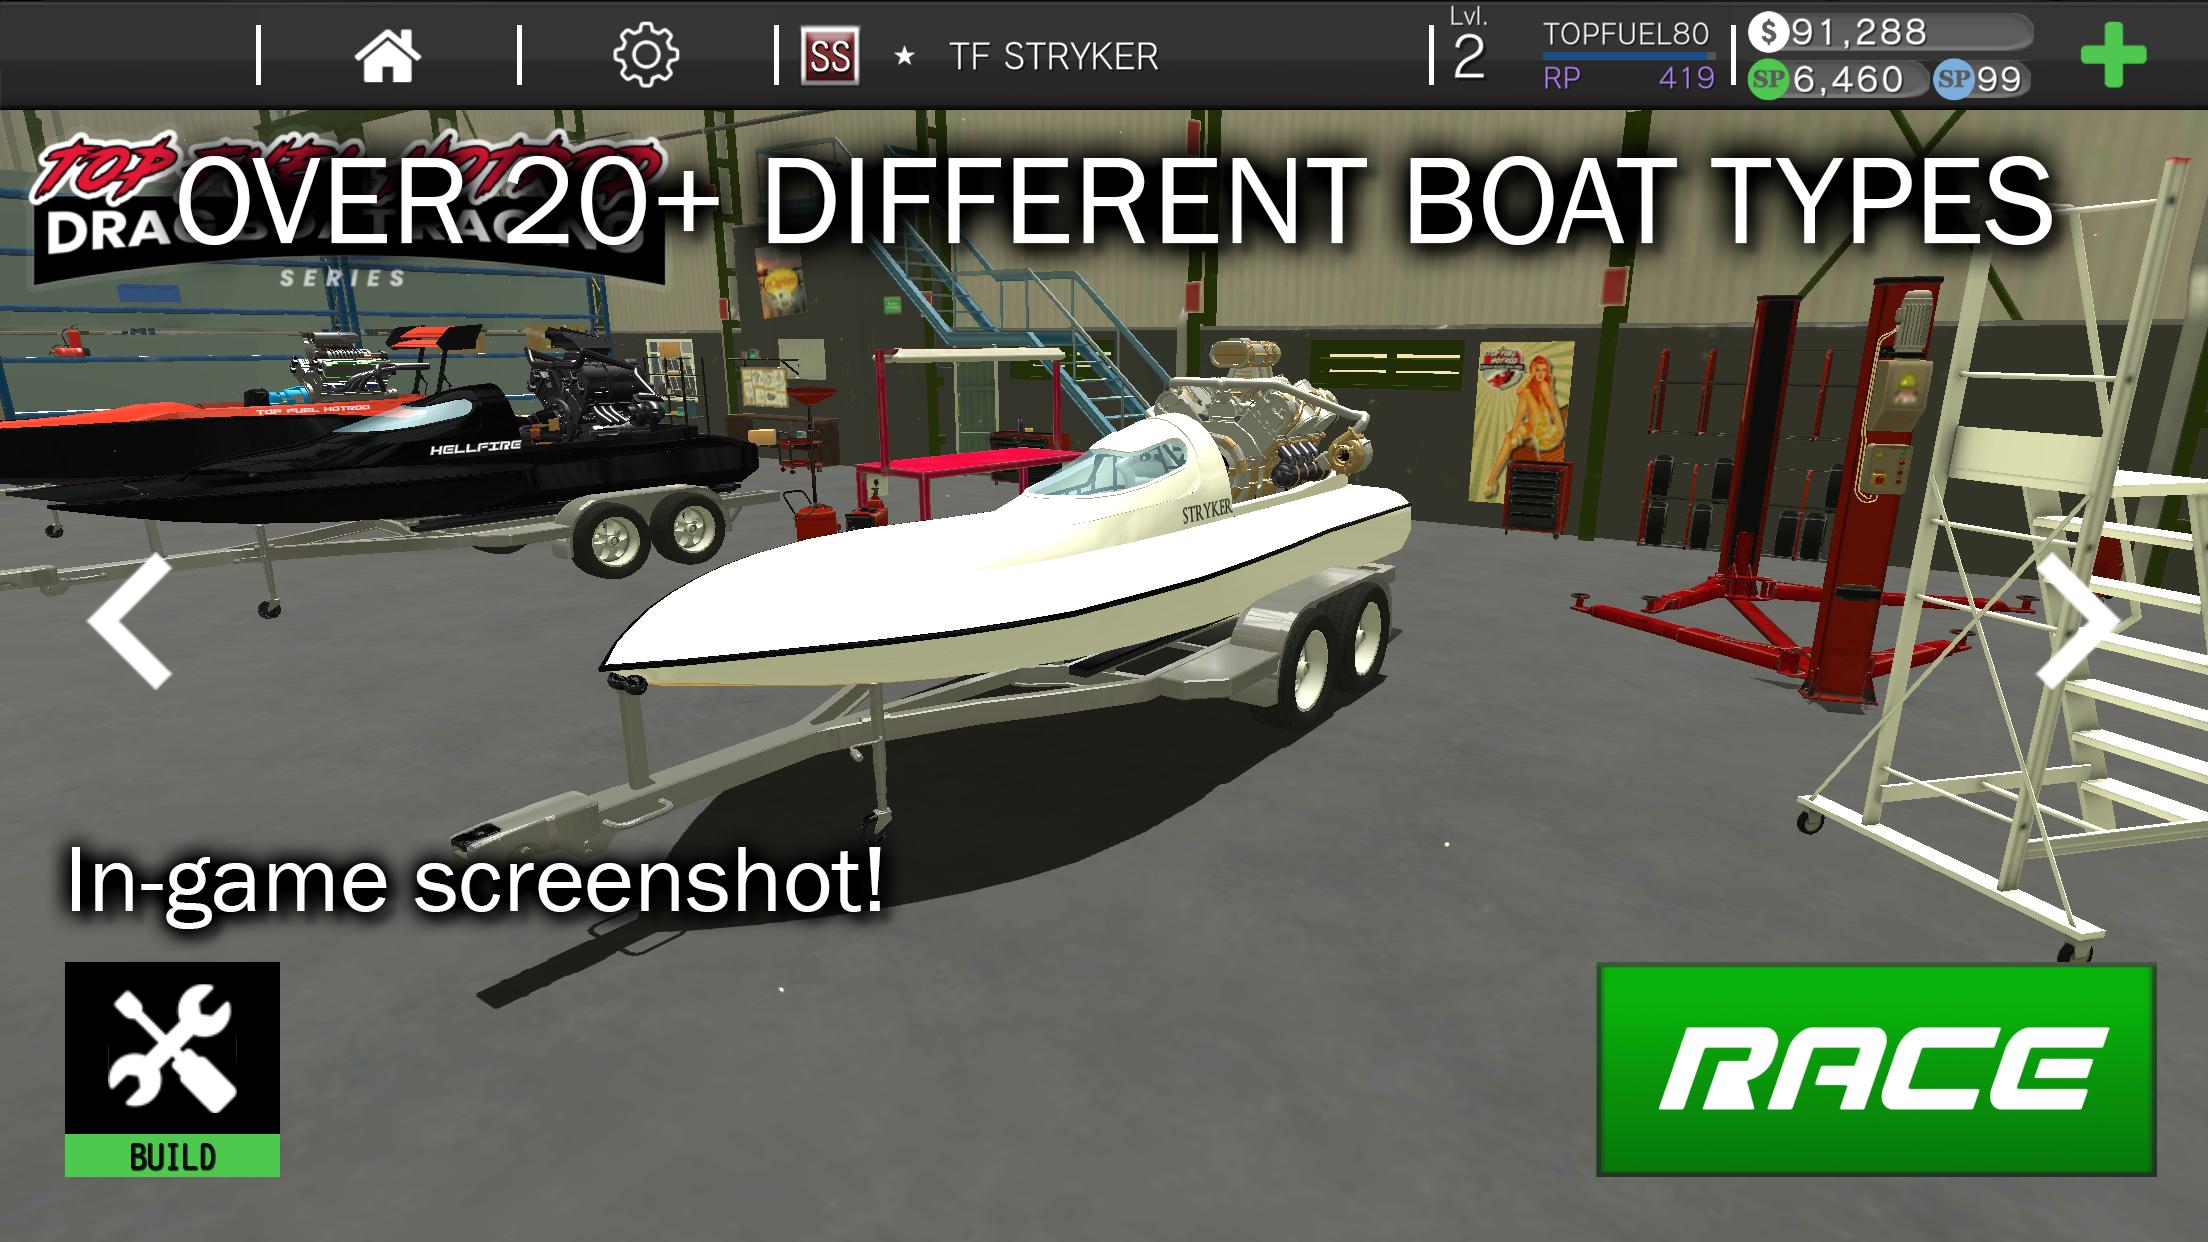 Top Fuel Hot Rod - Drag Boat Speed Racing Game 1.16 Screenshot 6